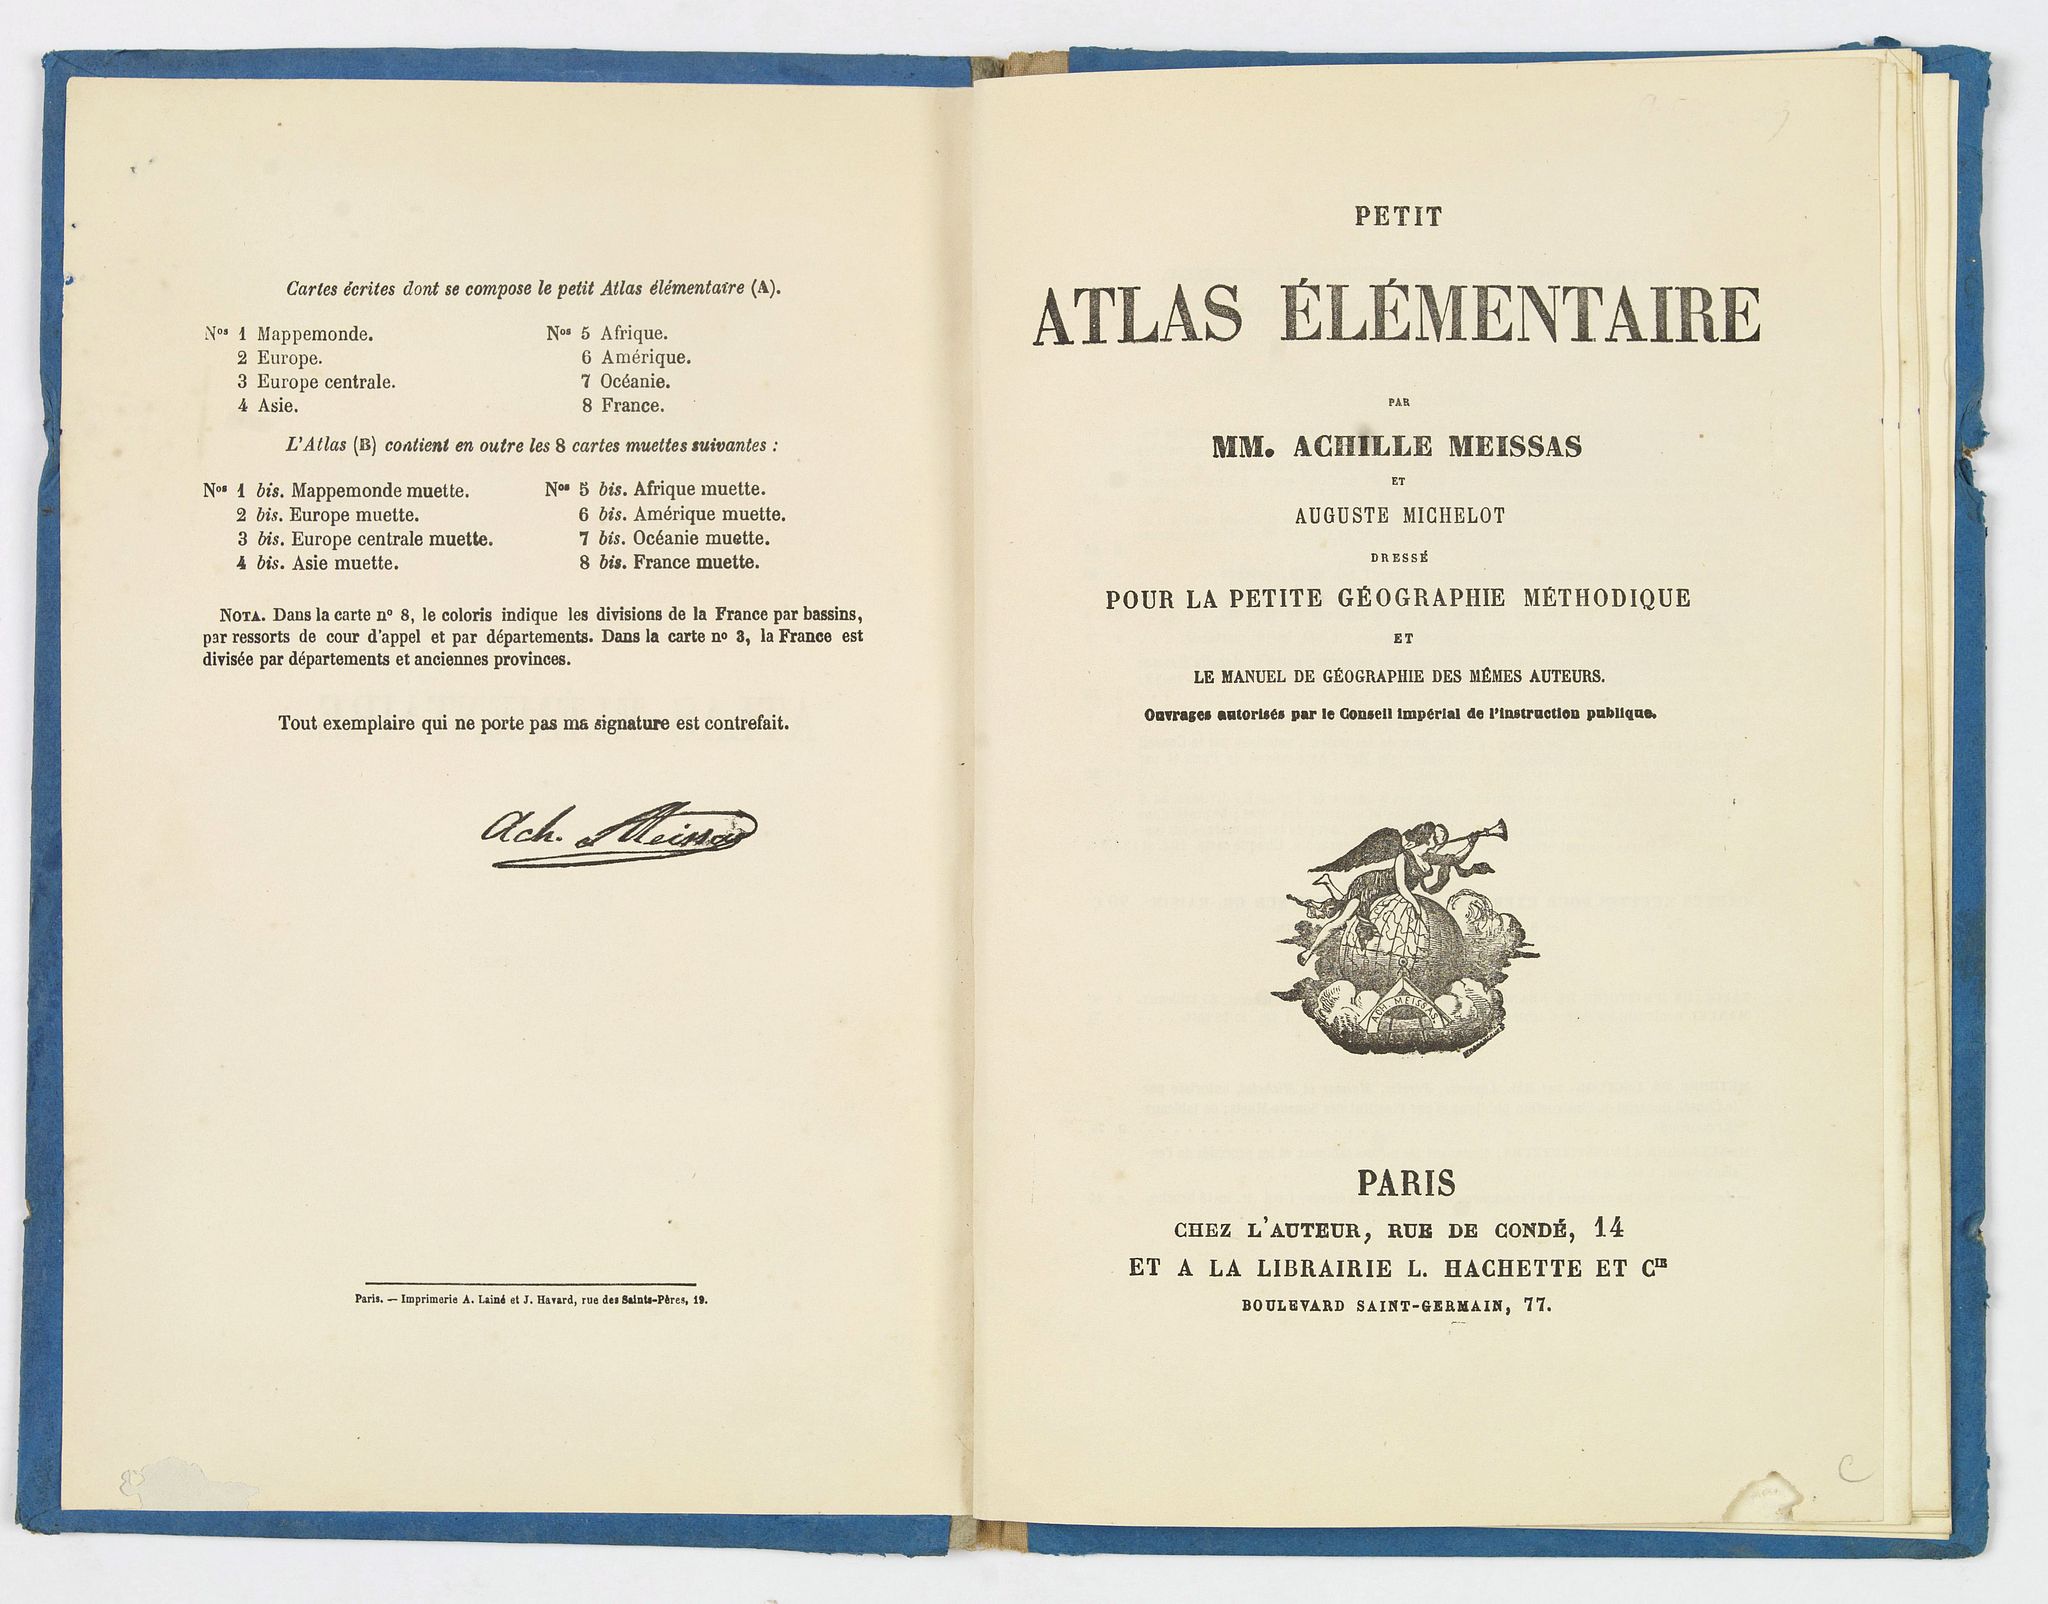 	Petit Atlas Elementaire